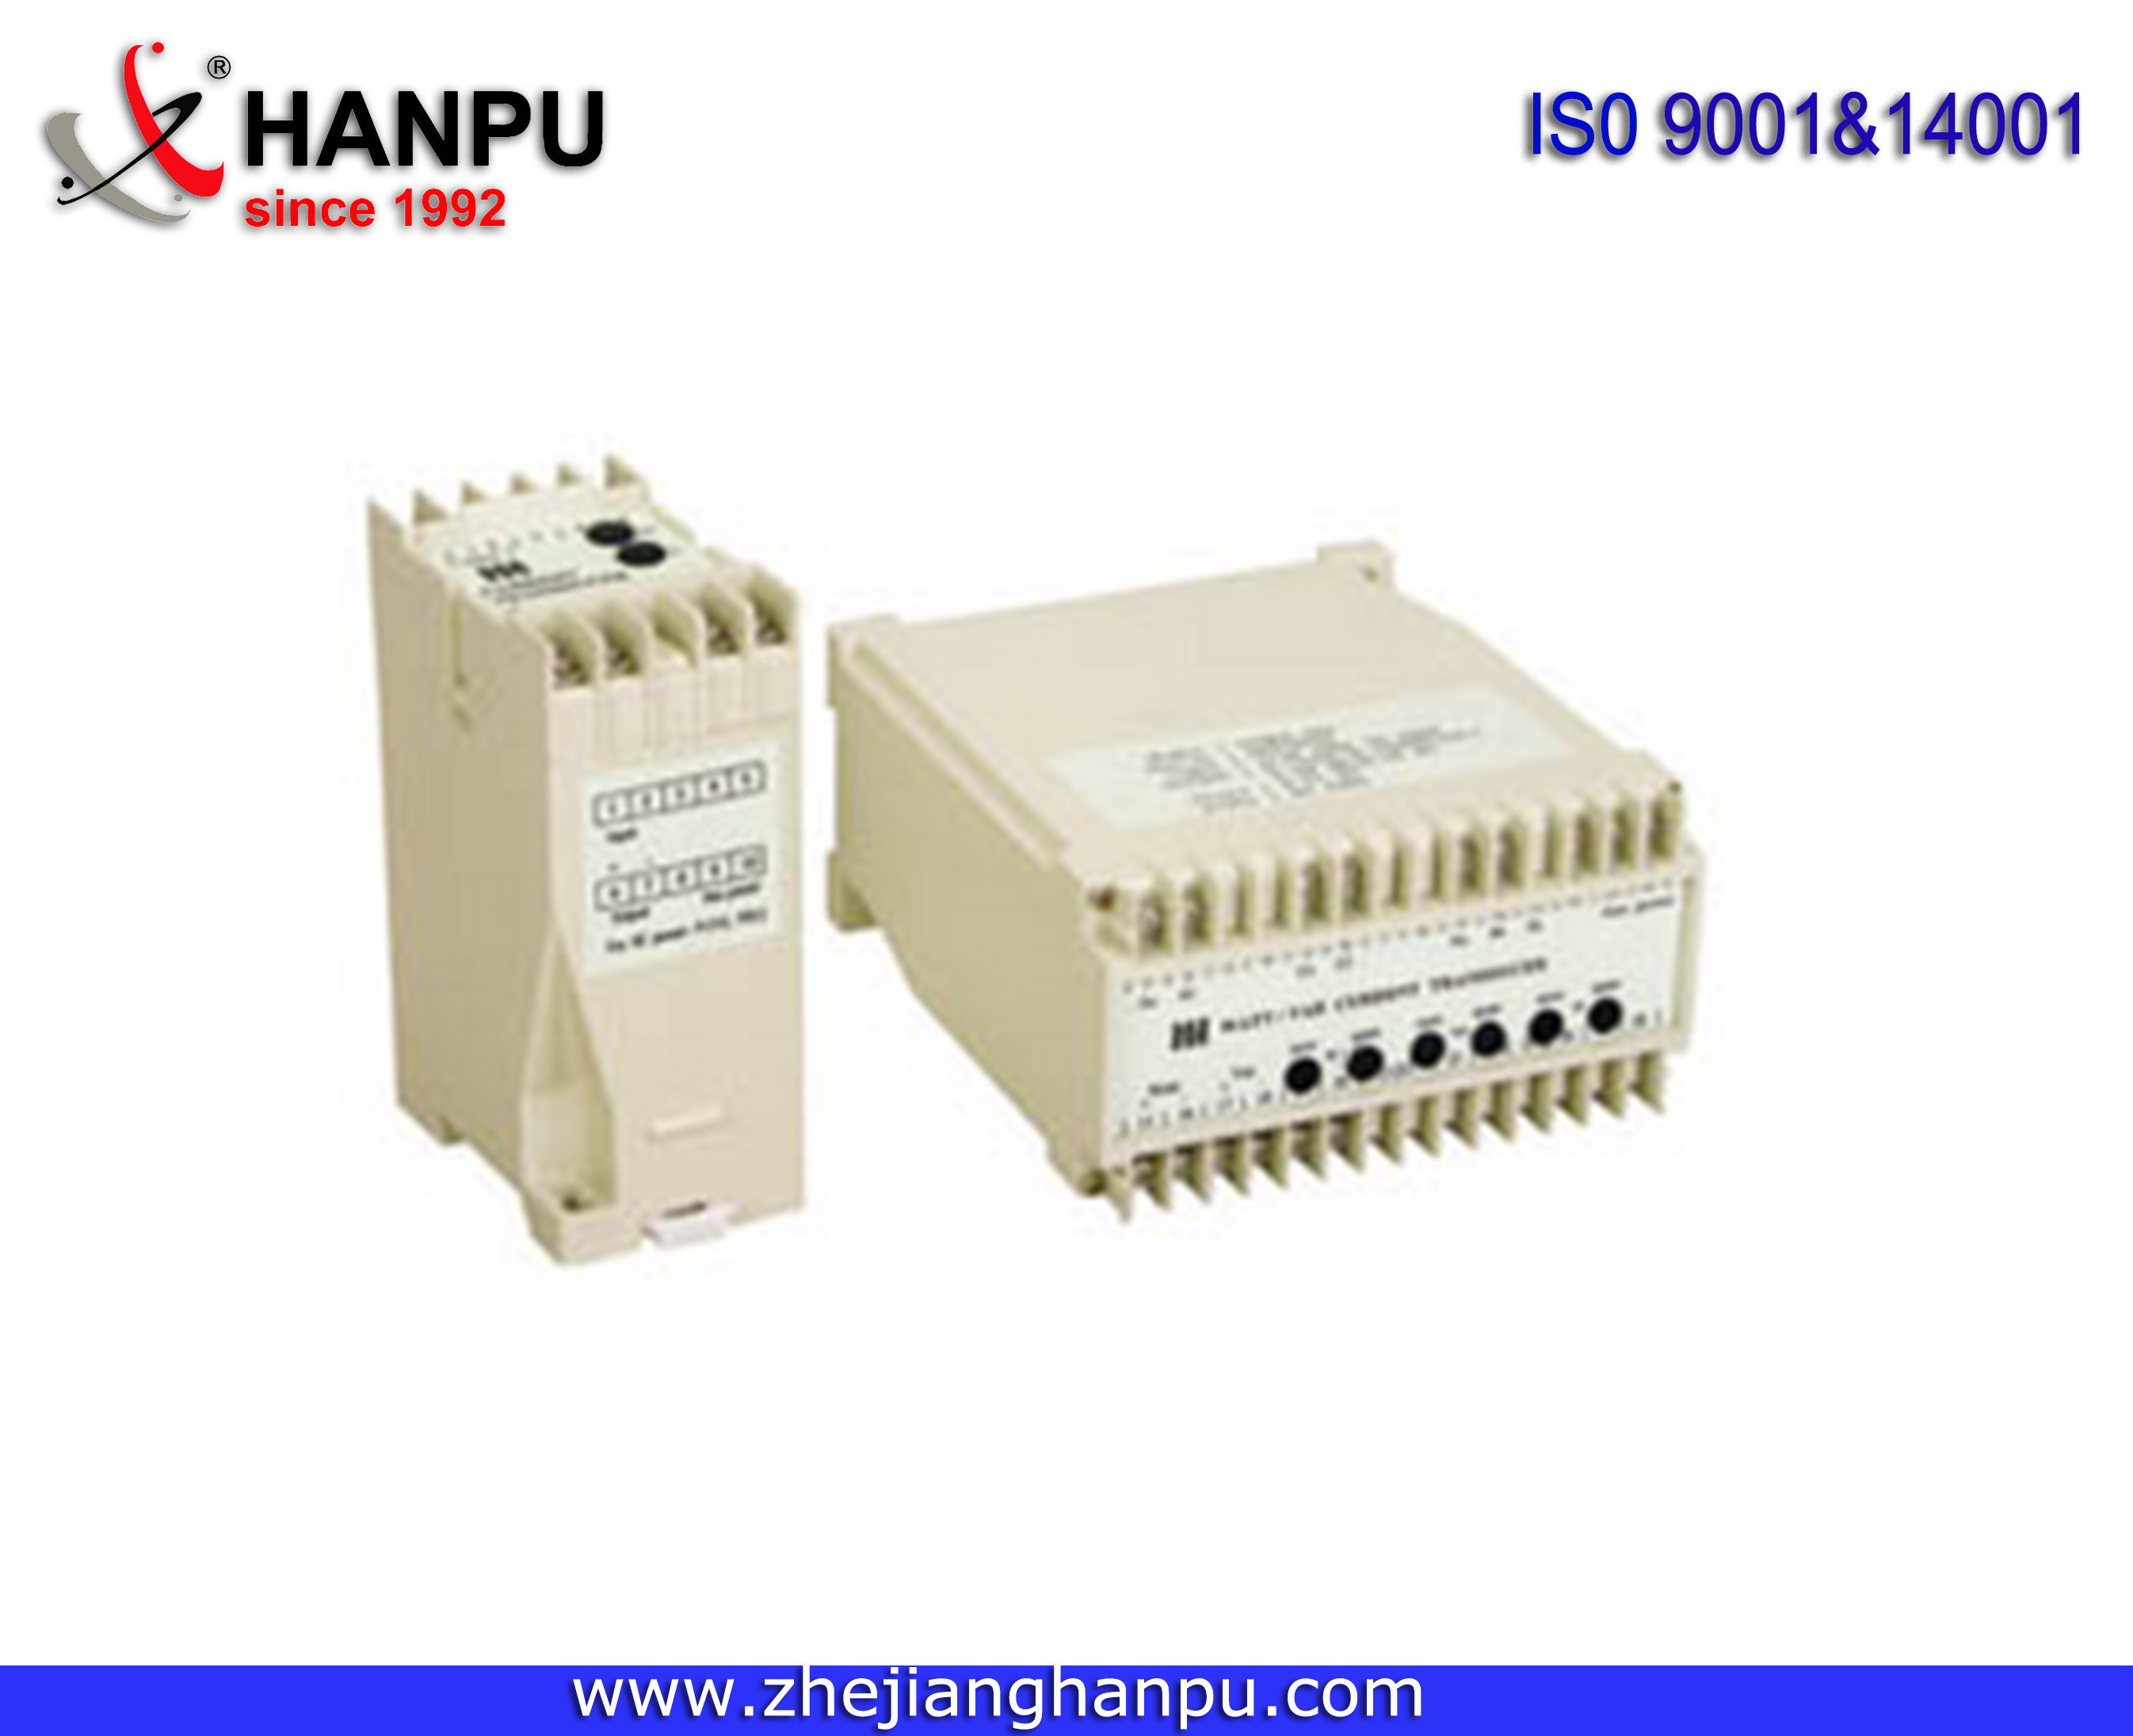 Gp/Ep Series Electrical Measuring Transducer